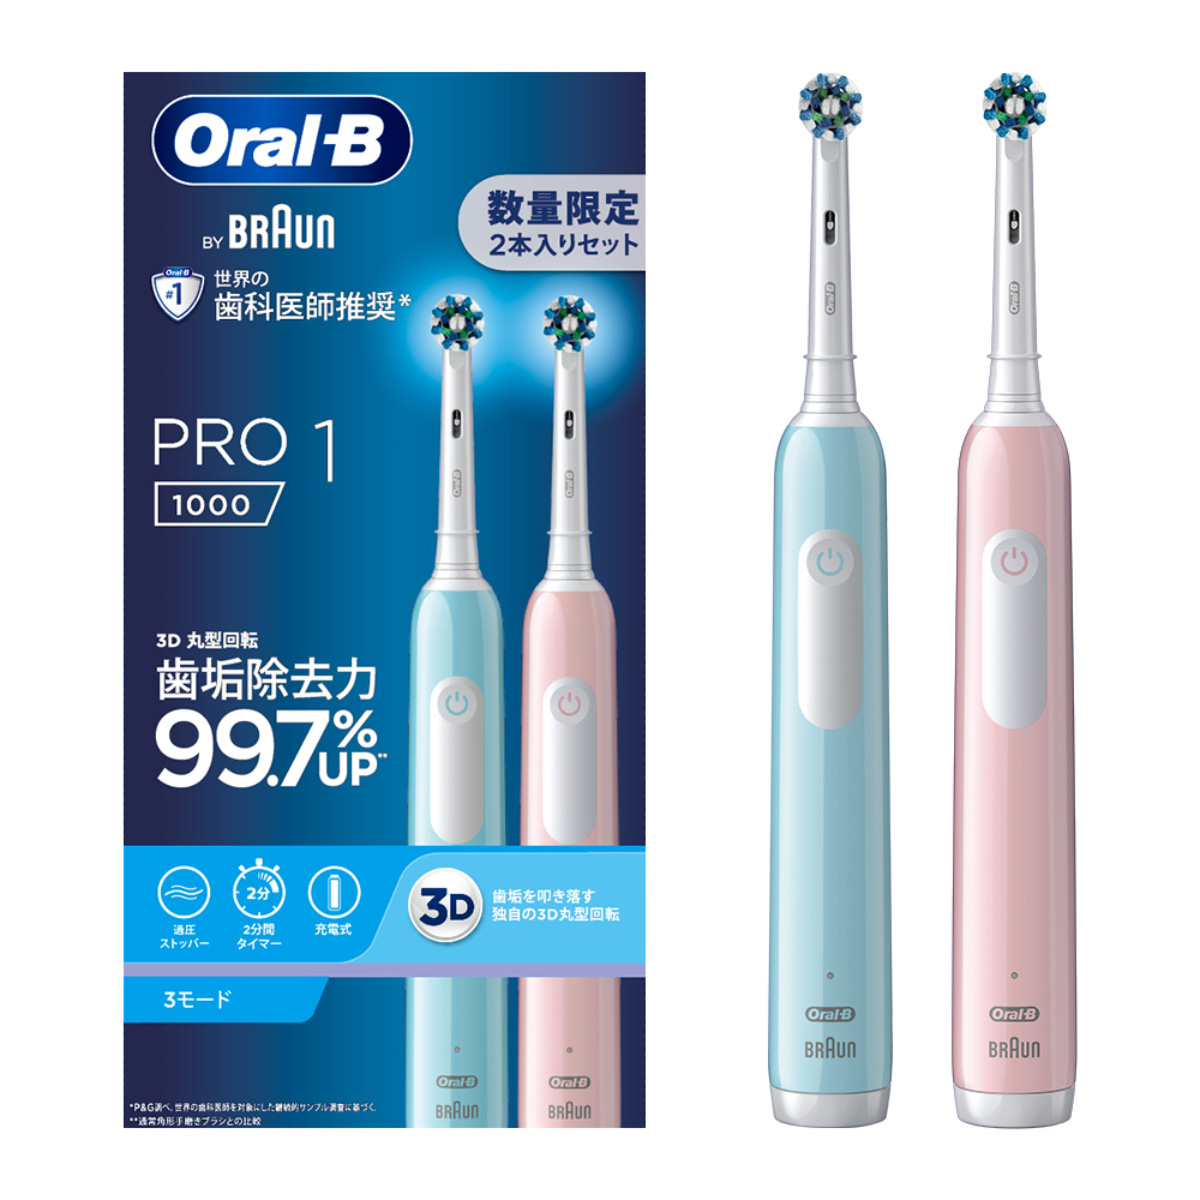 Oral-B by BRAUN オーラルB 電動歯ブラシ PRO1 カリビアン ライトローズ 2本　D3055133CB_LR